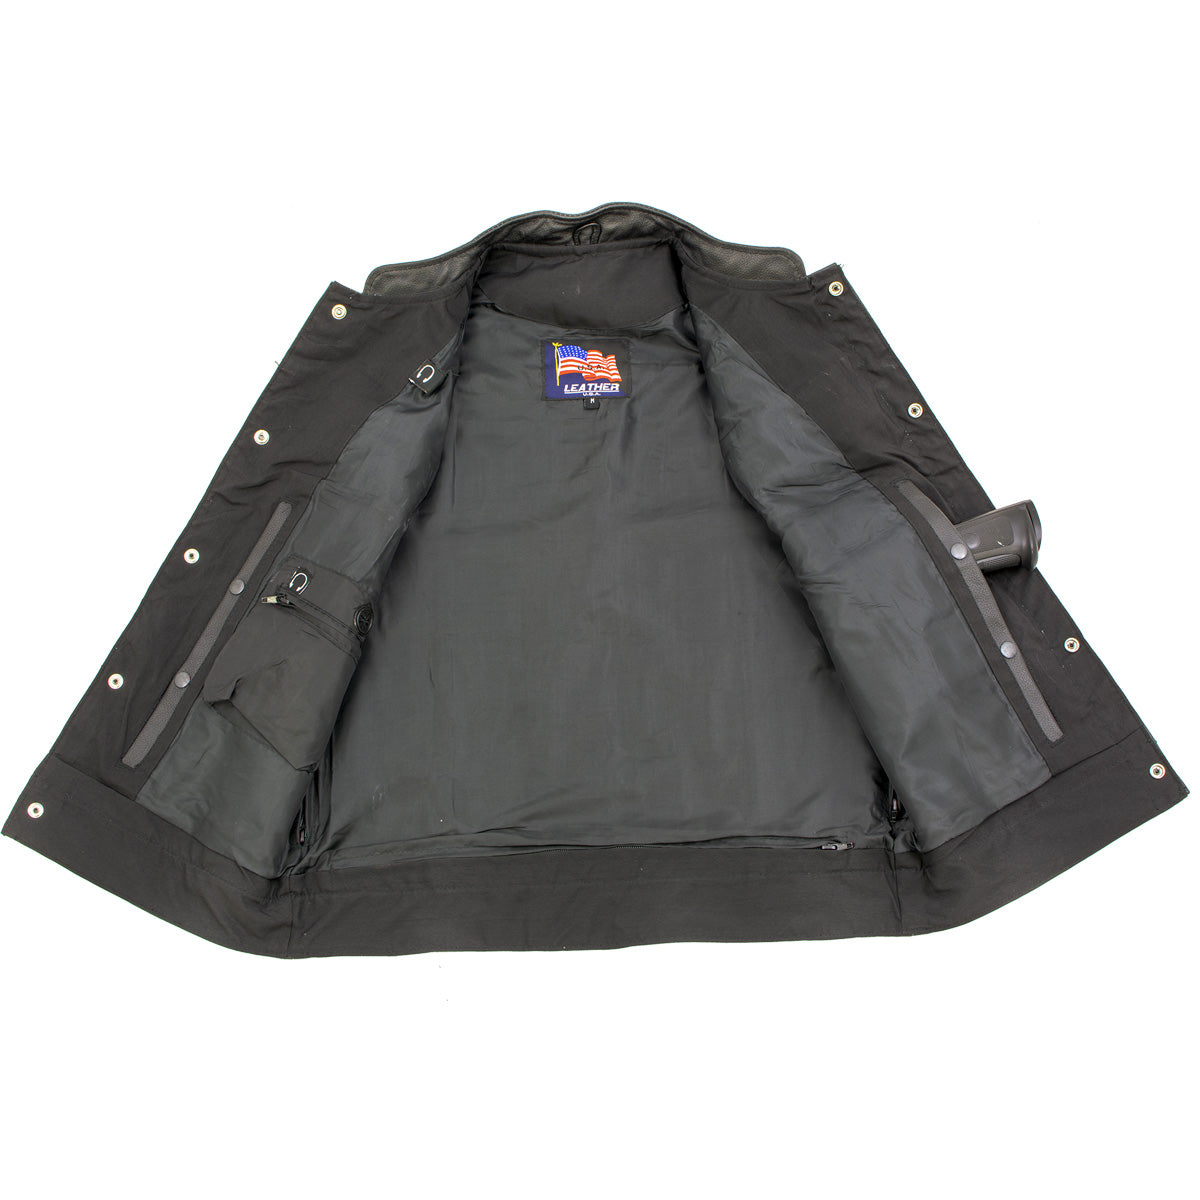 USA Leather 1205 Men's Black 'Combat Style' Motorcycle Biker Leather Vest